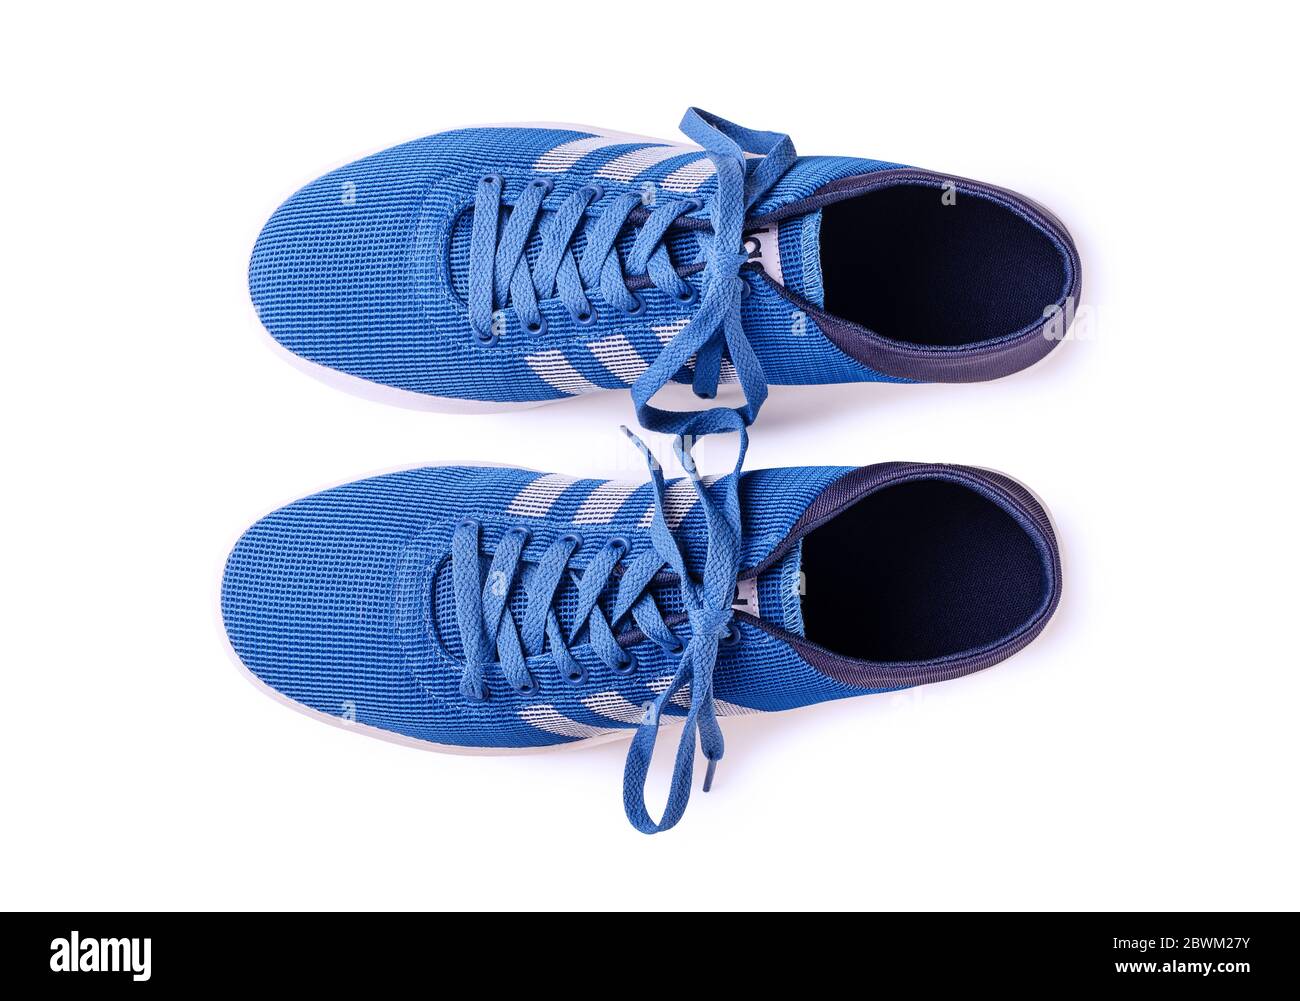 Zapatillas adidas azules fotografías e imágenes de alta resolución - Alamy